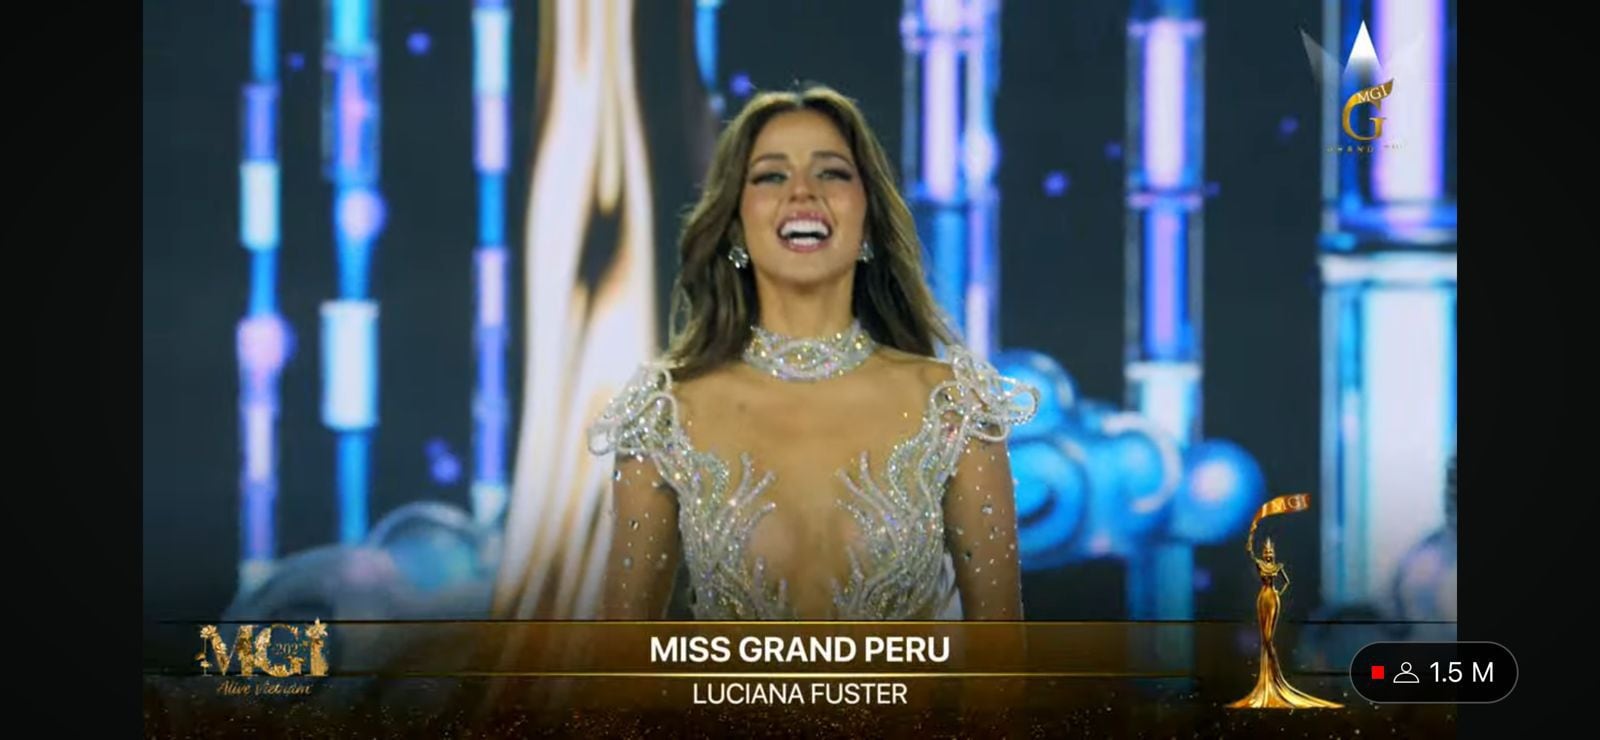 Luciana Fuster quedó en el Top 5 en la gran final del Miss Grand International, el cual se realiza hoy en Vietnam.